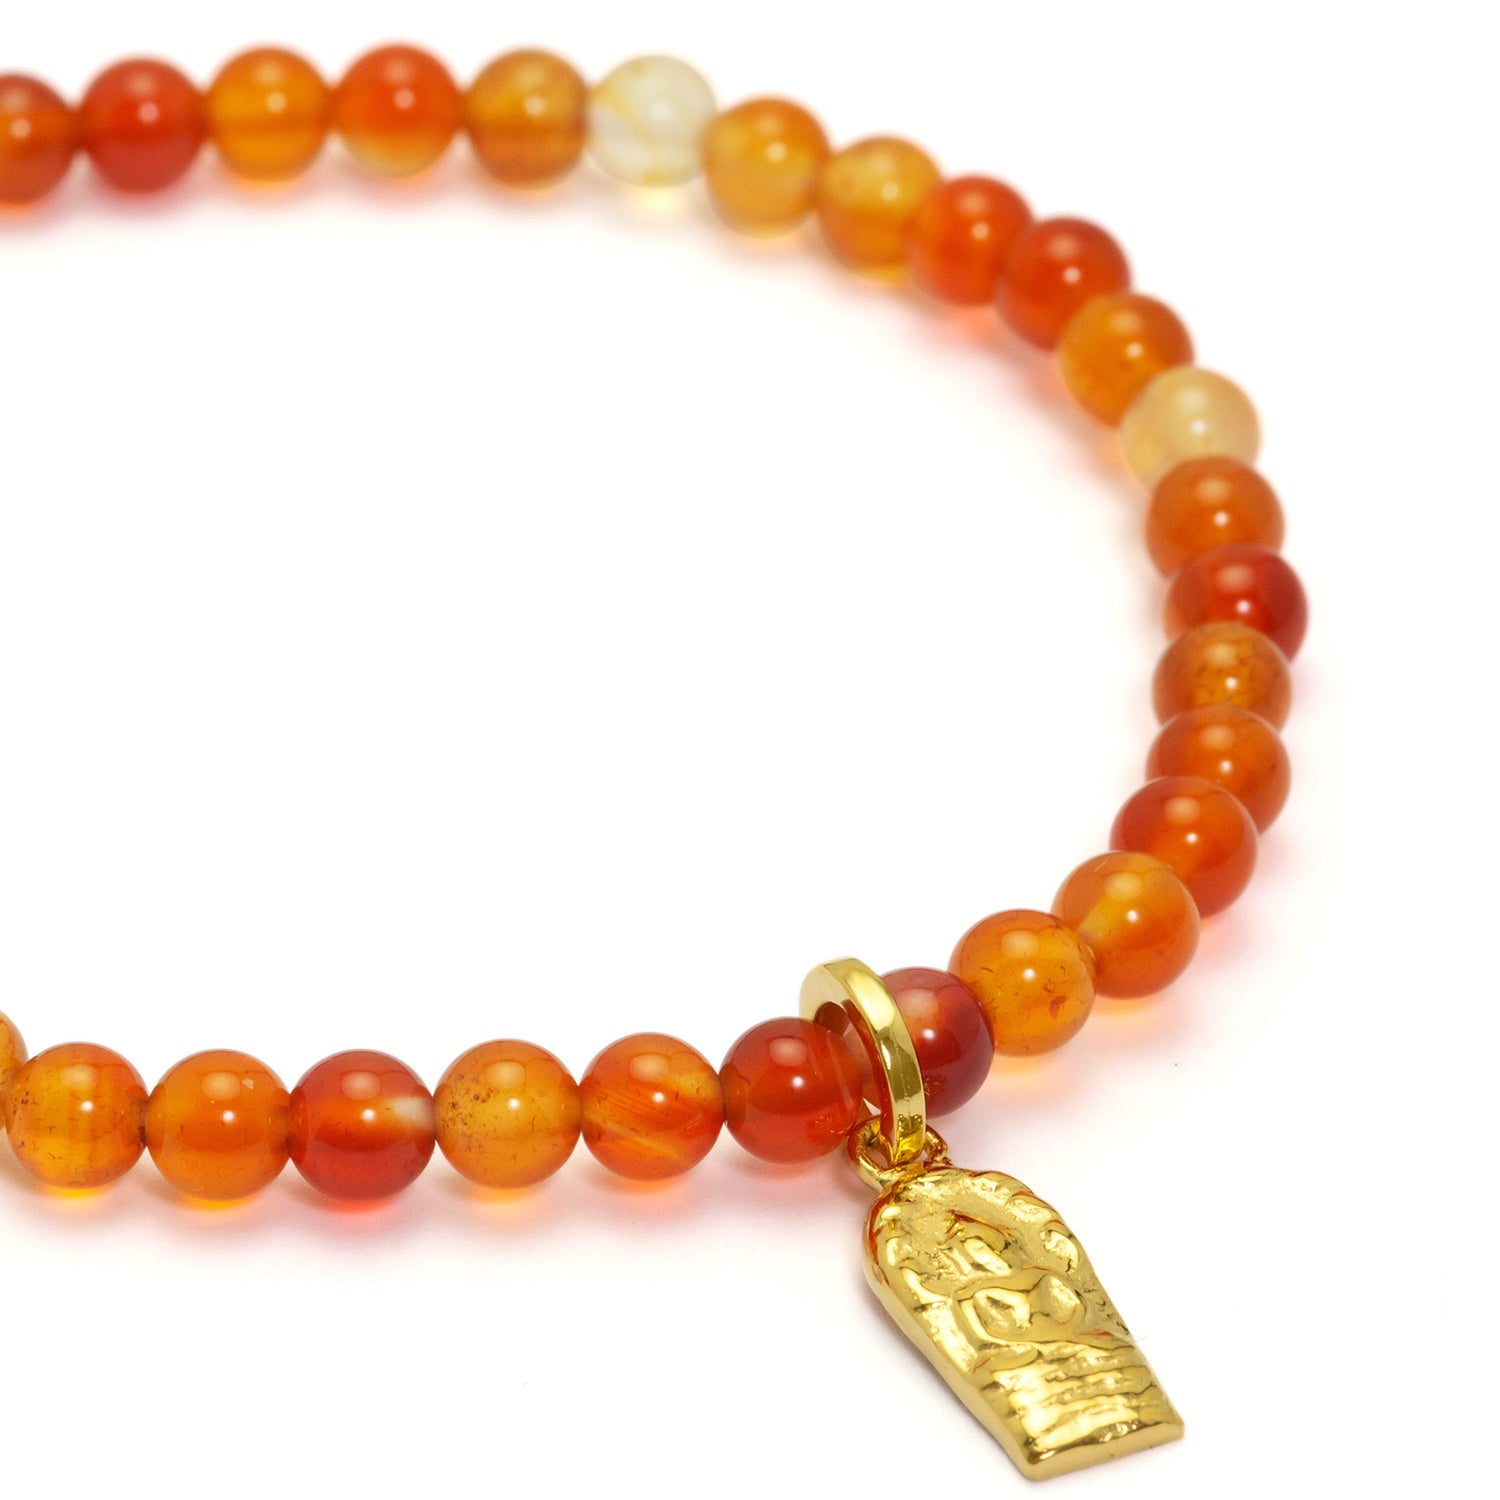 Buddha bracelet mini made of bright carnelian beads with gold-plated Buddha pendant from ETERNAL BLISS - Spiritual jewelry